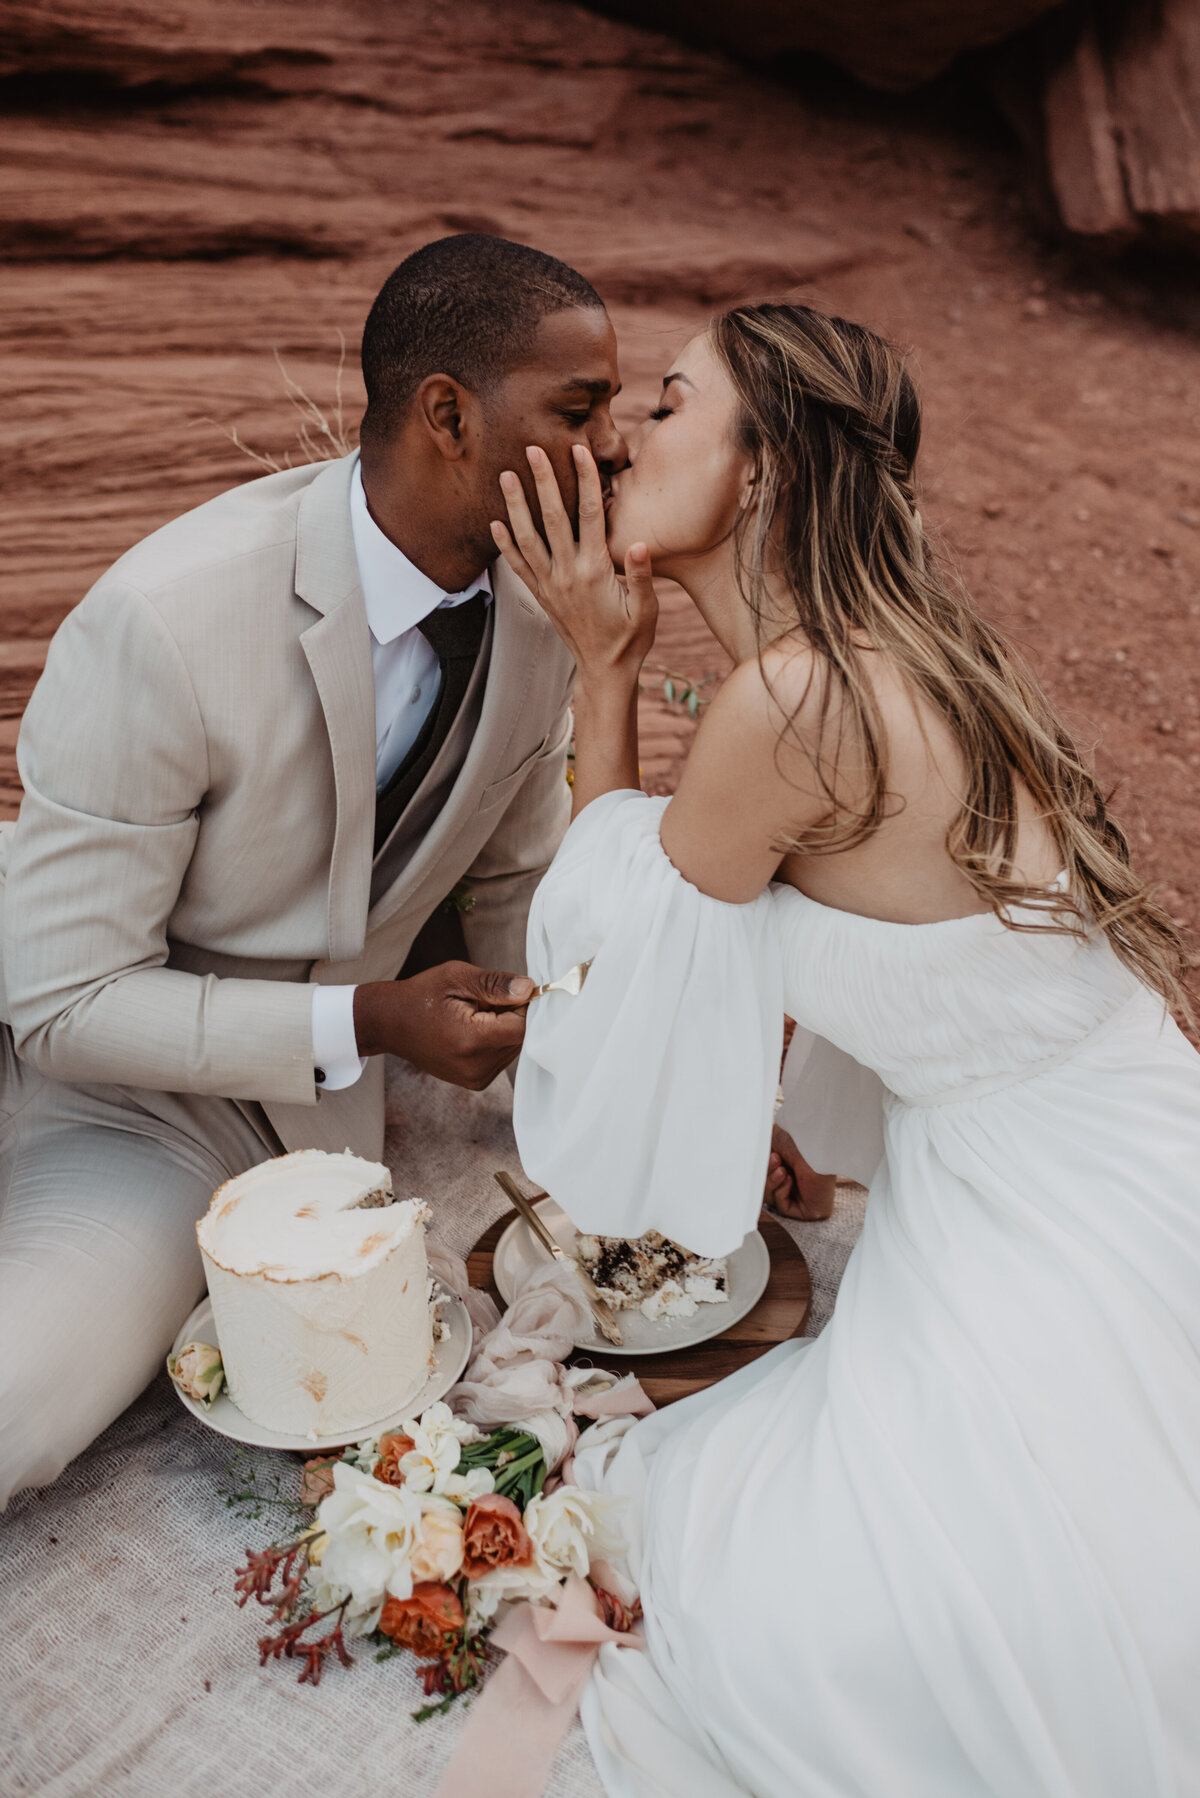 Utah Elopement Photographer captures couple kissing after cake cutting